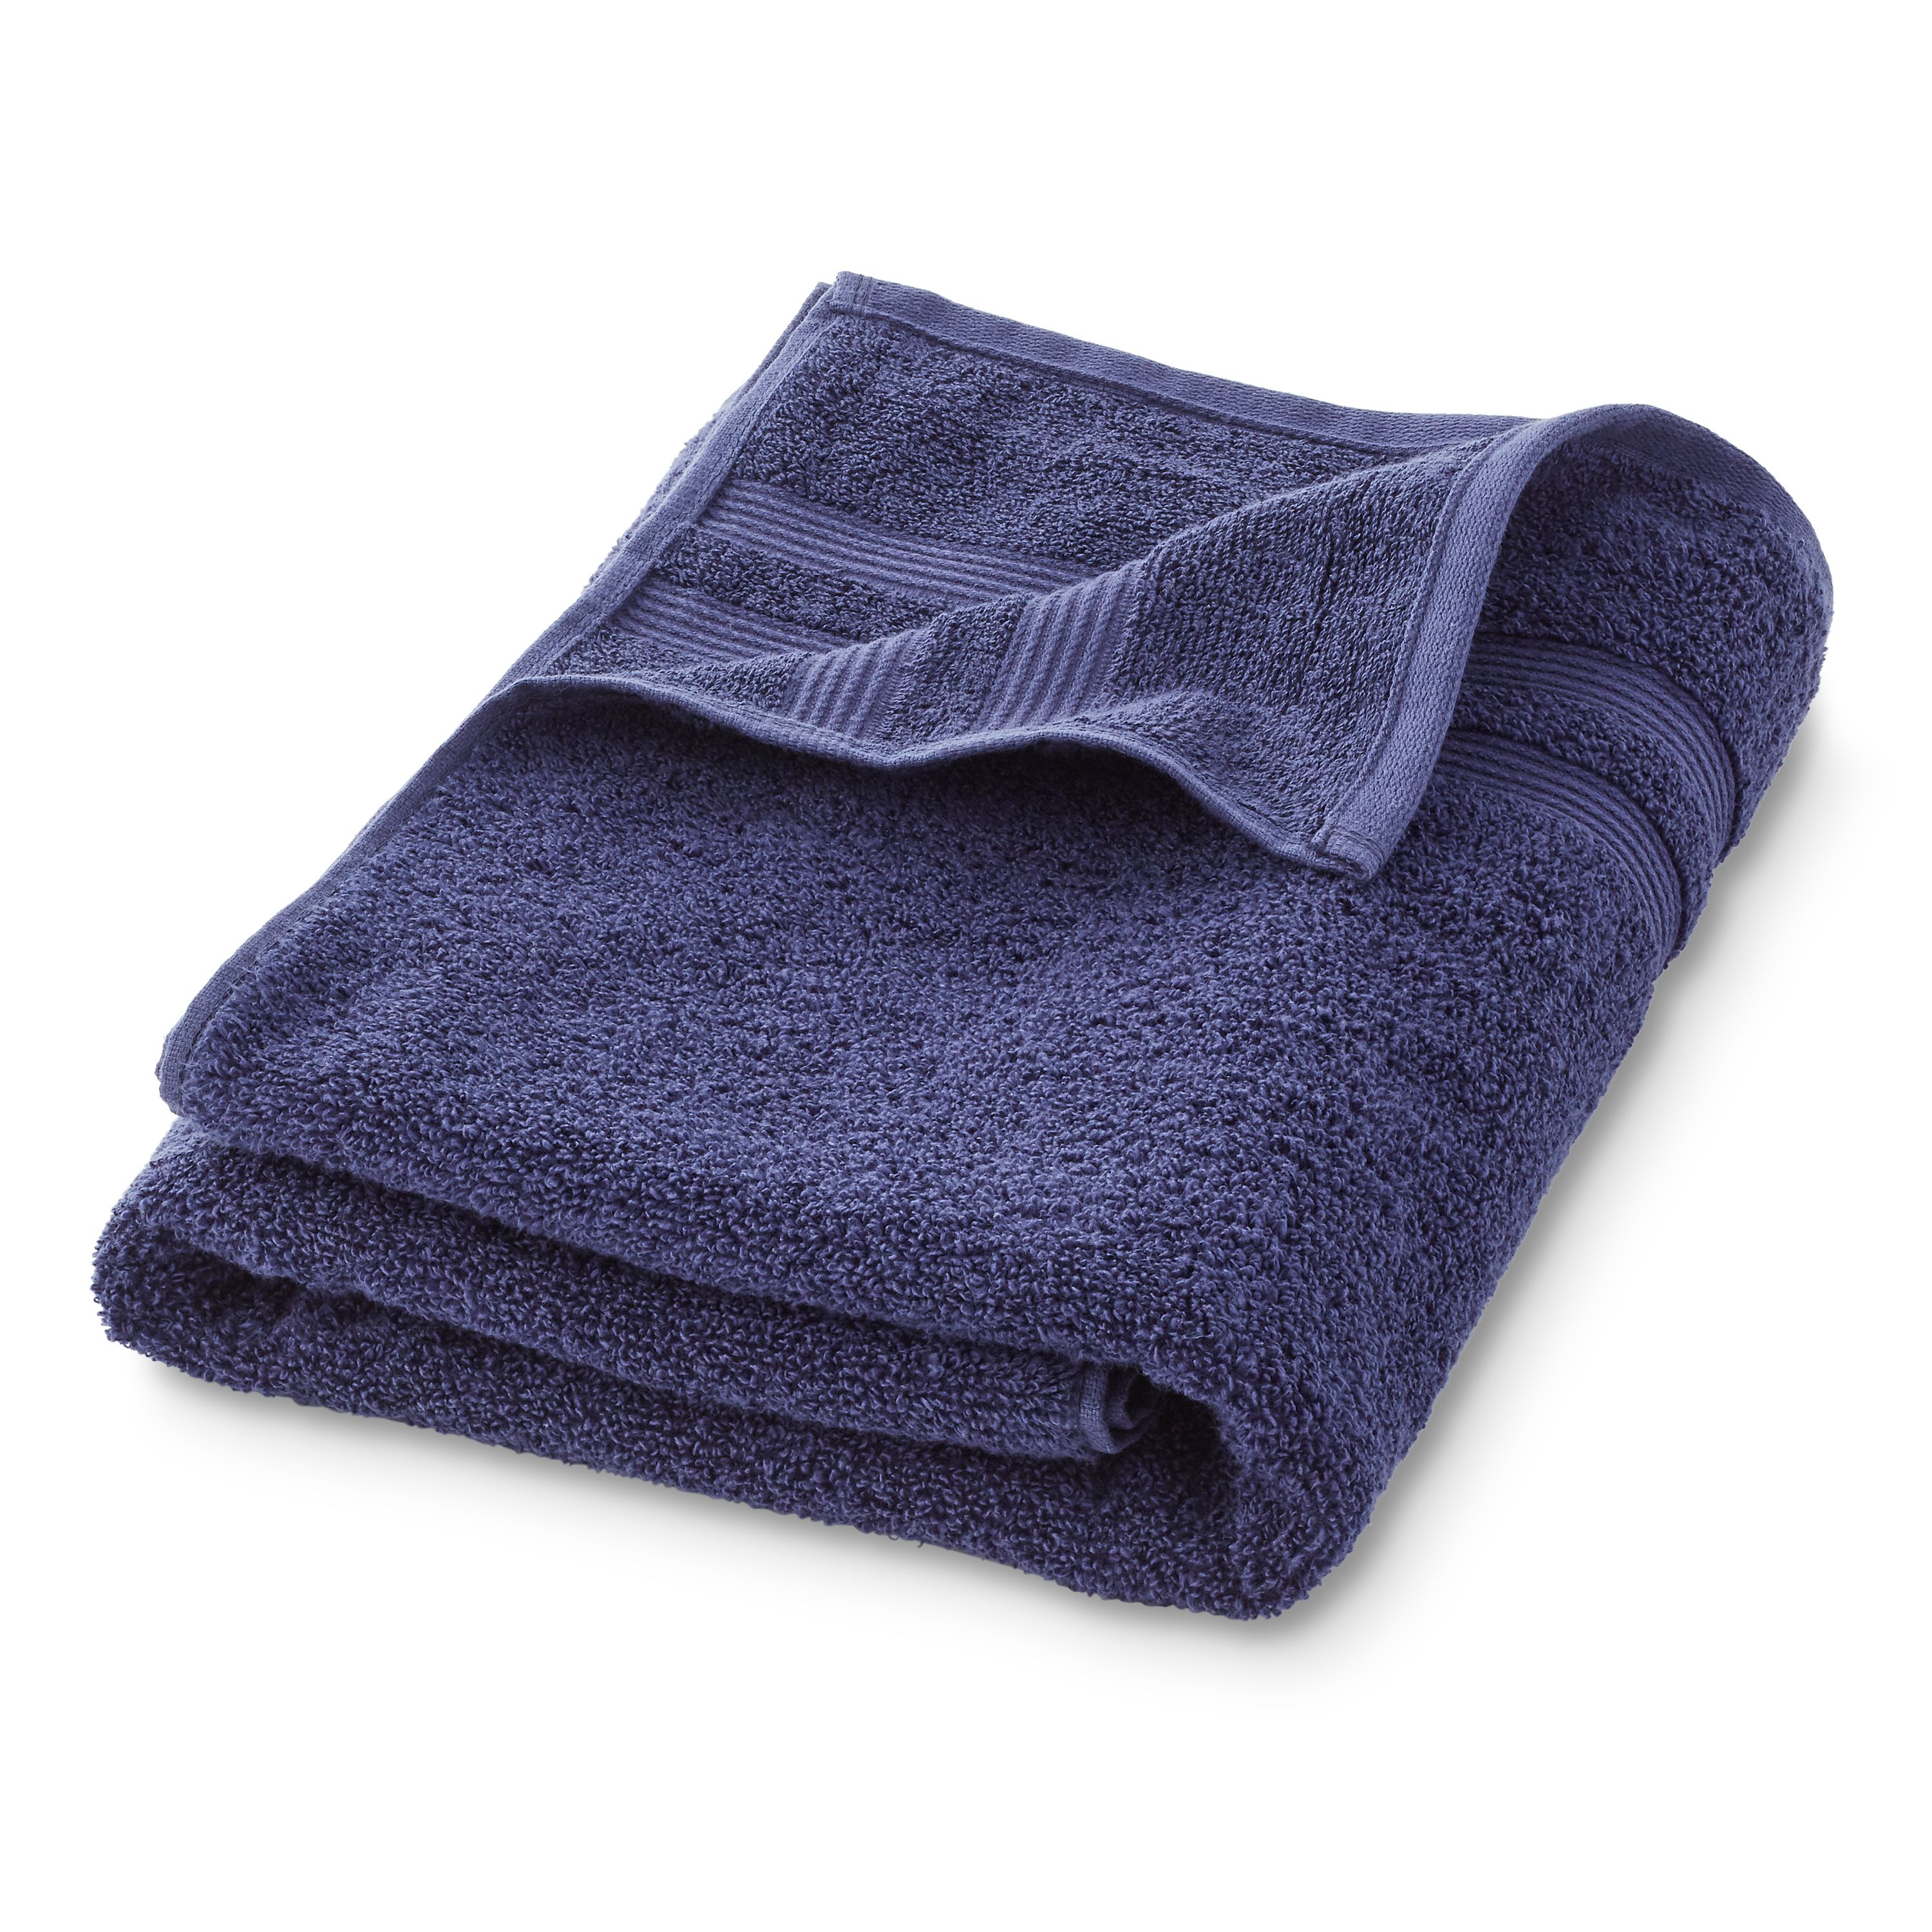 Mainstays Performance Mix Textured 6-Piece Bath Towel Set - Navy Blue - image 5 of 9